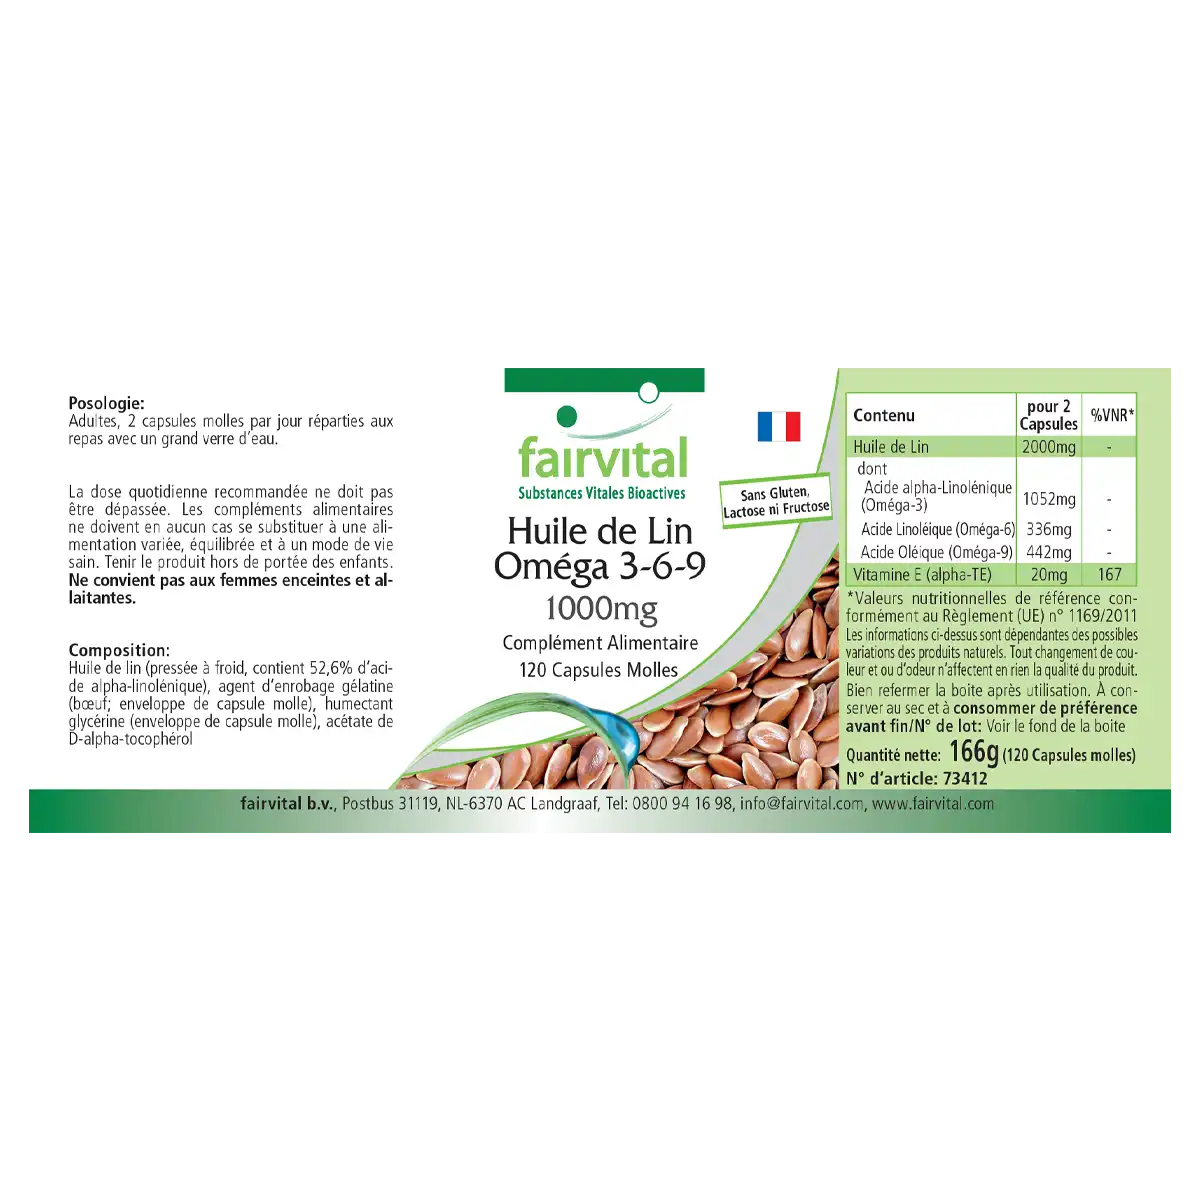 Flax seed oil linseed oil omega-3-6-9 - 120 softgels